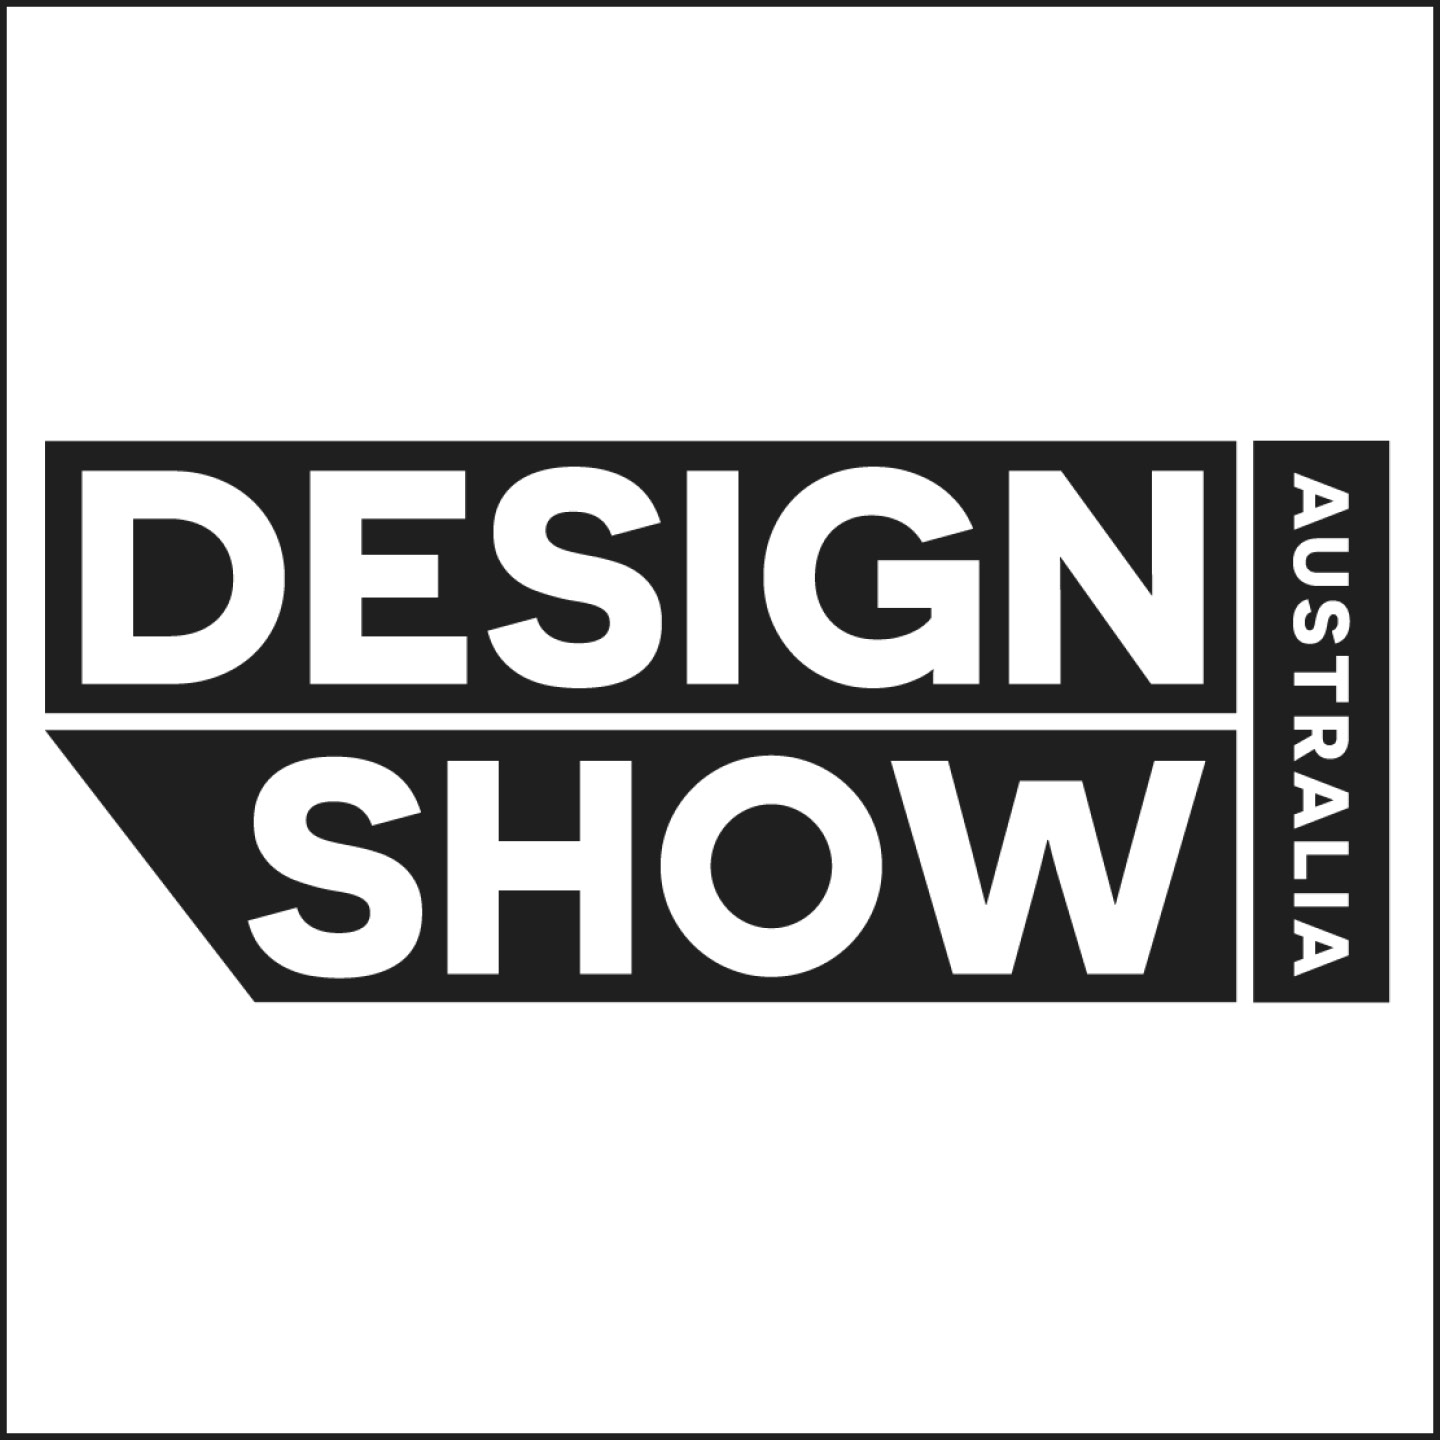 Design Show Australia